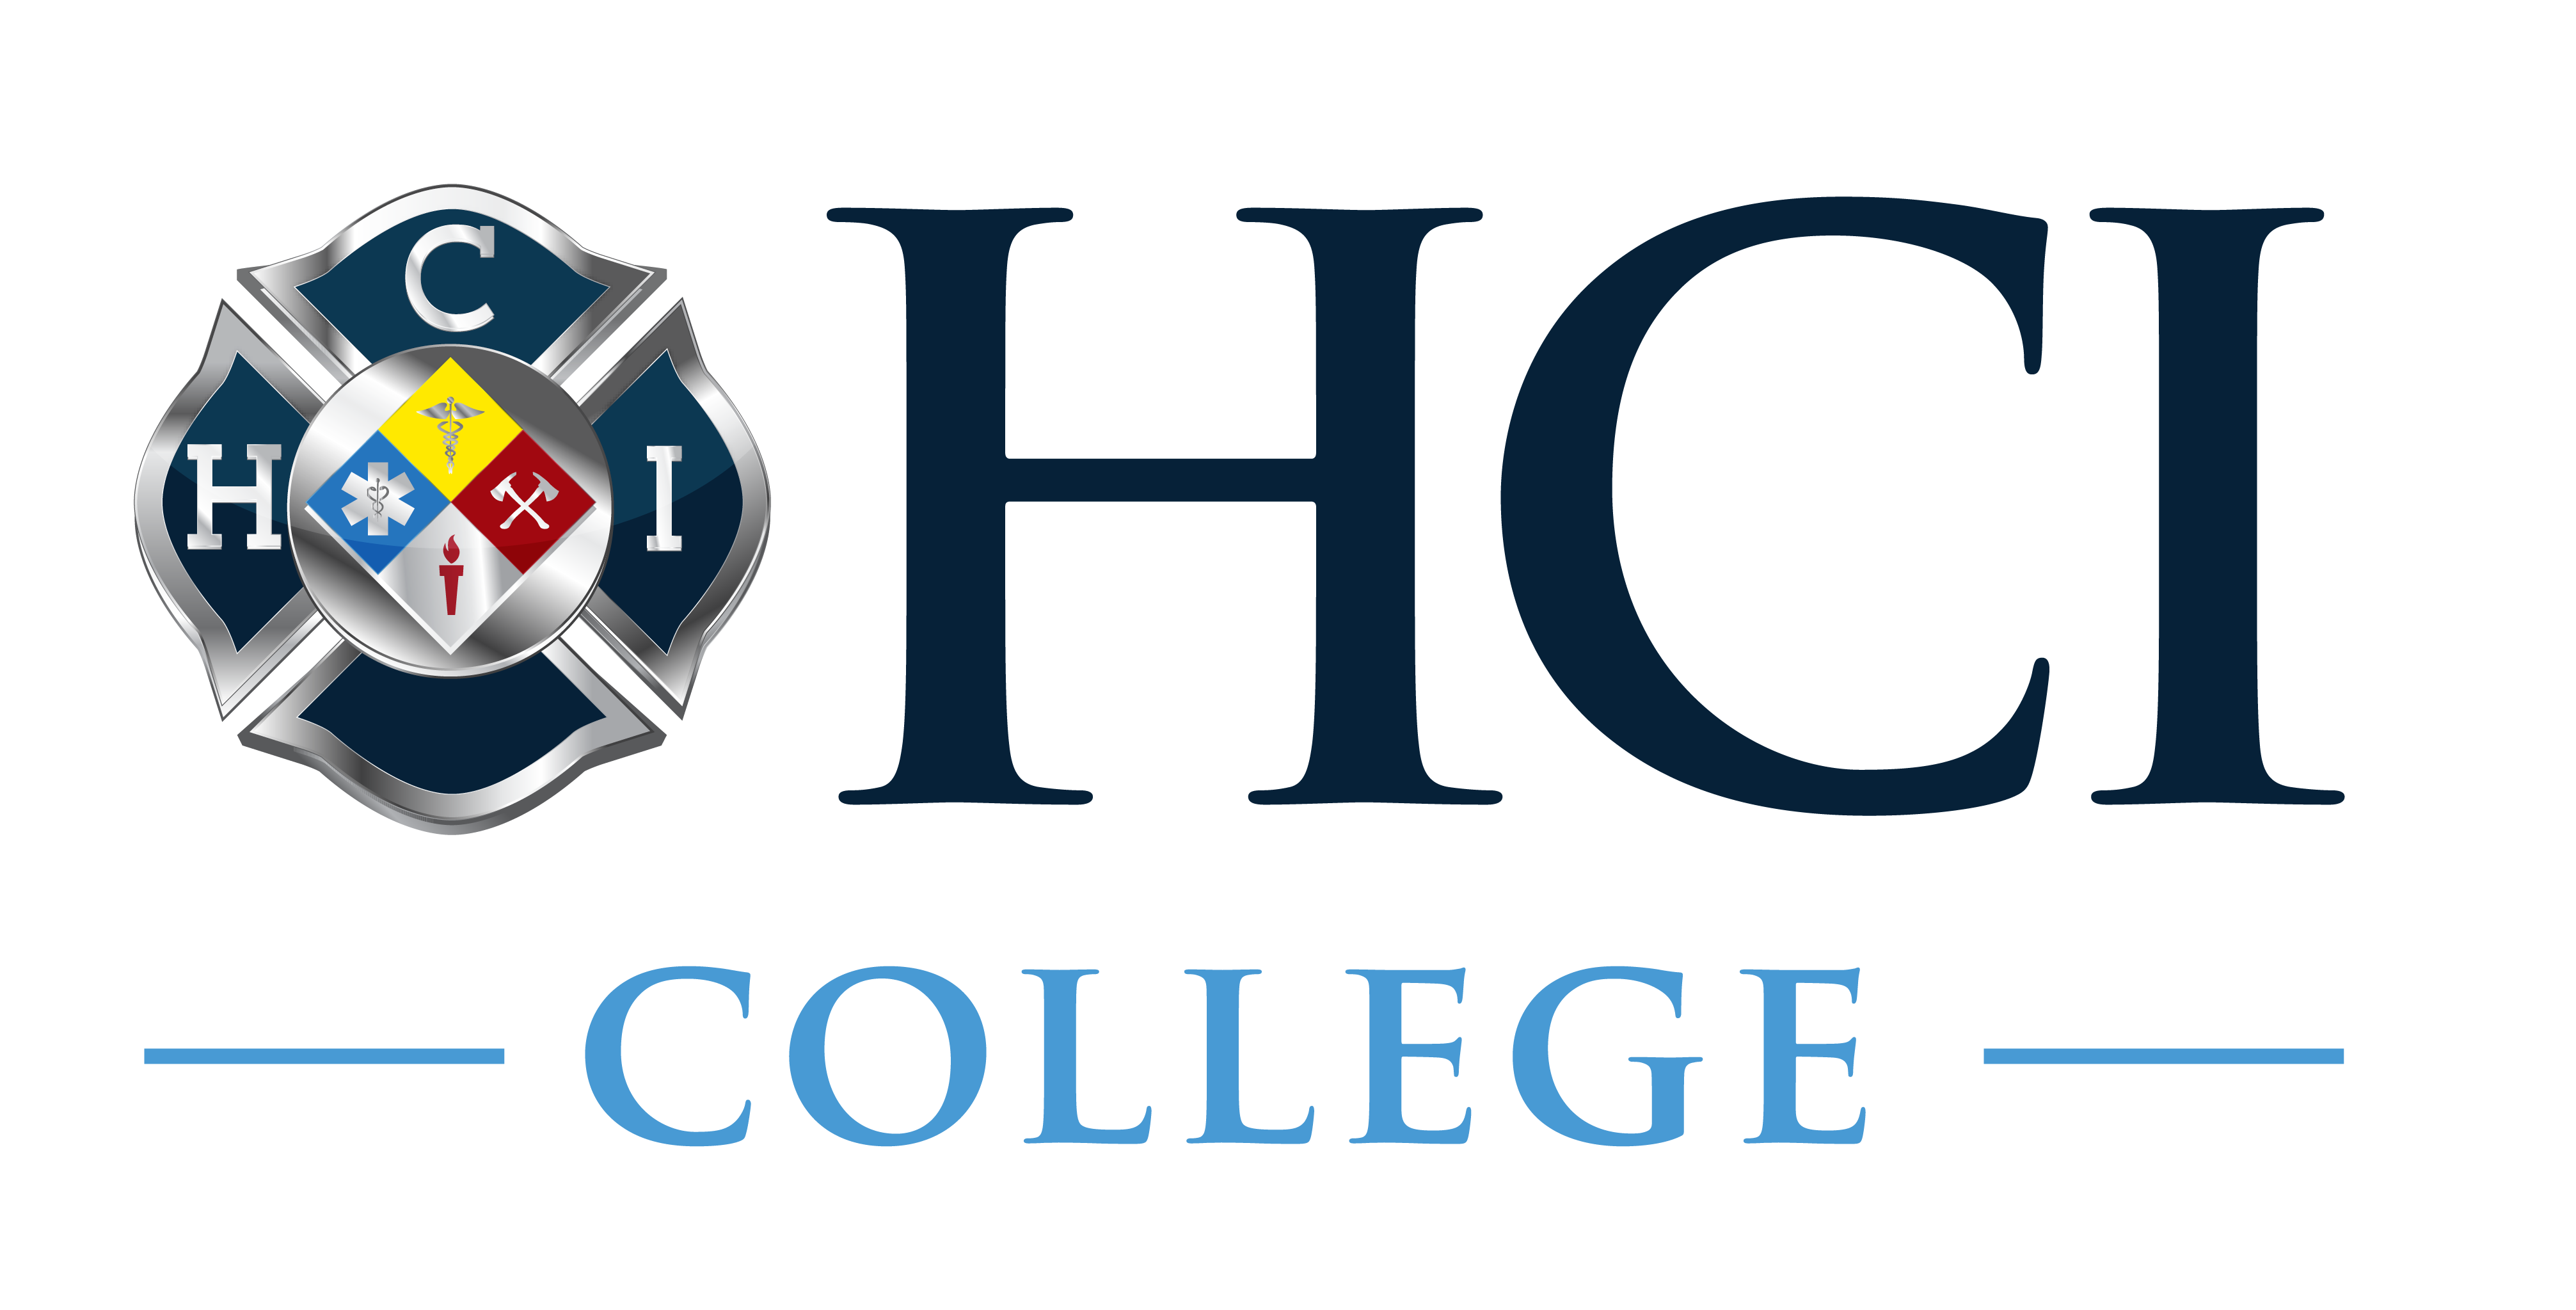 Hci са. HCI. HCI картинка. Gifu College logo. Celt Colleges logo.